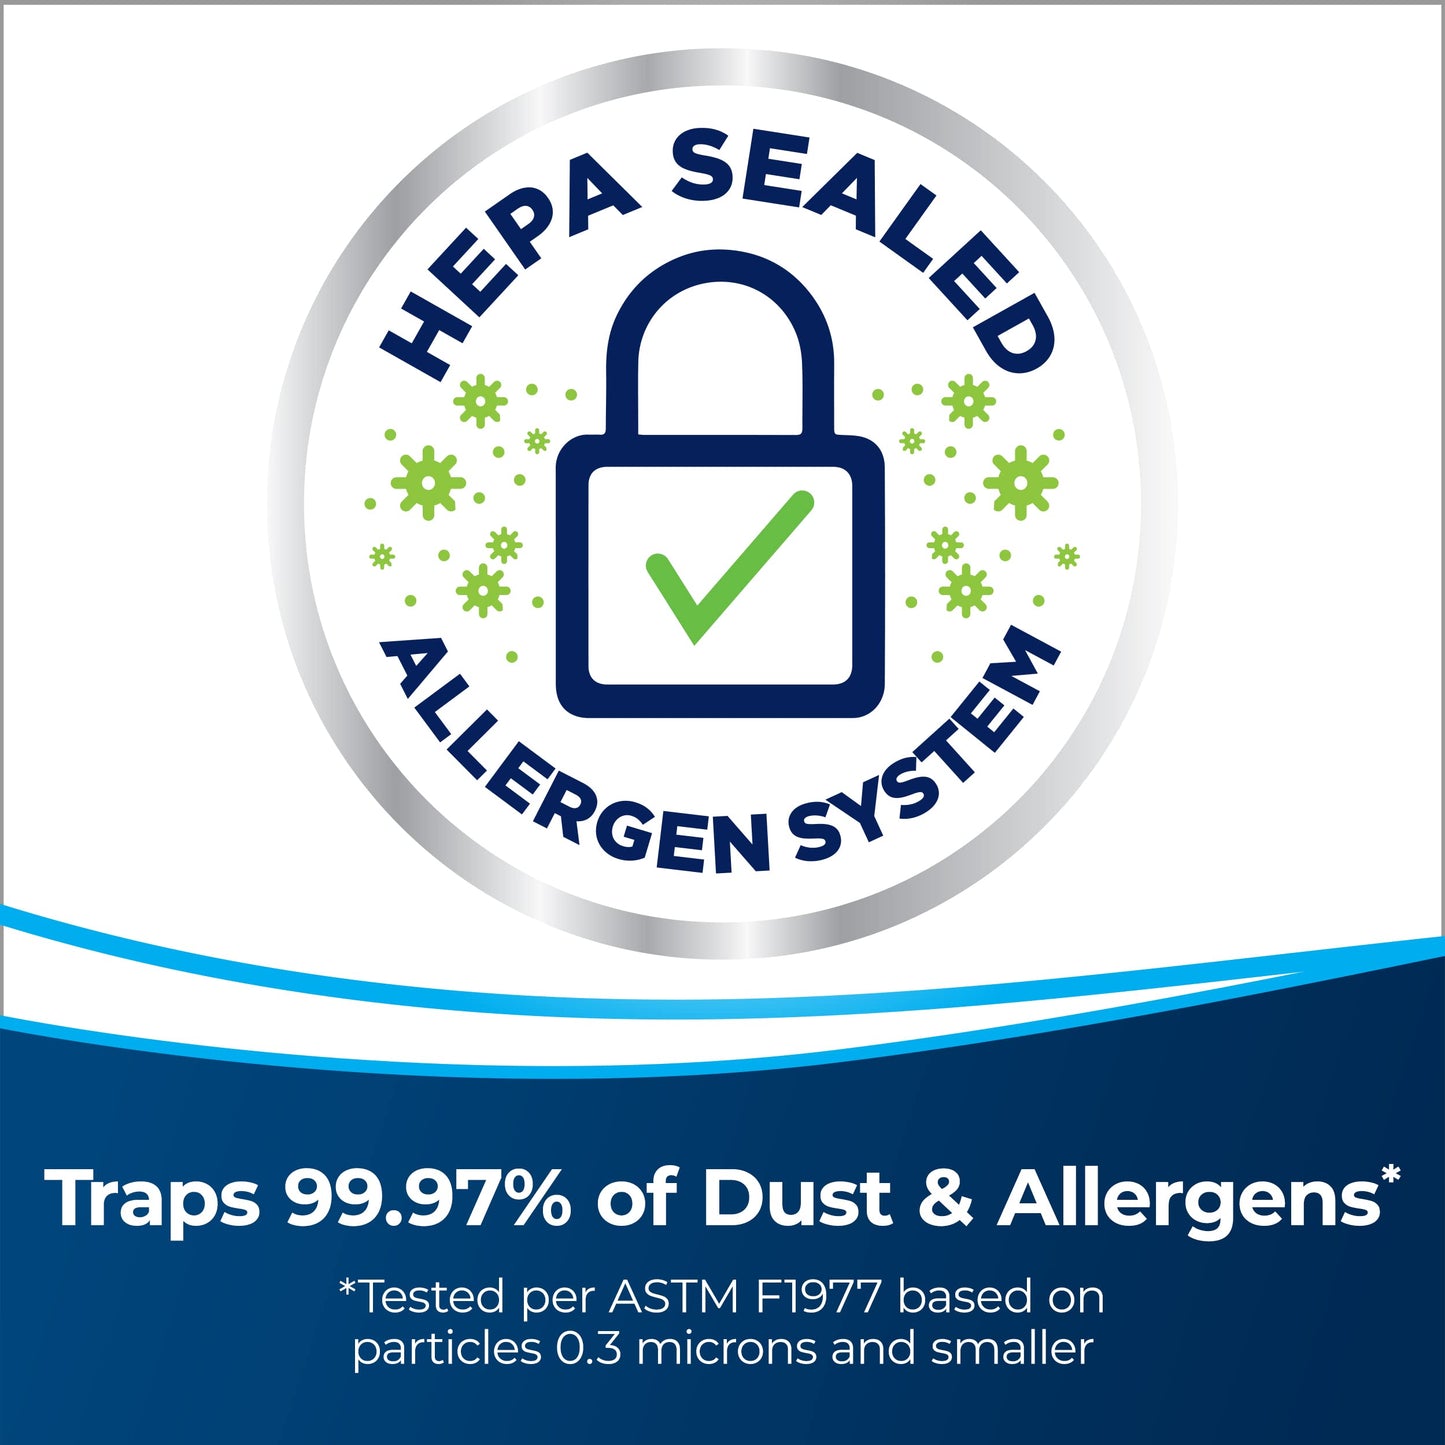 BISSELL 2998 MultiClean Allergen Lift-Off Pet Vacuum - HEPA Filter, LED Headlights, Blue/Black